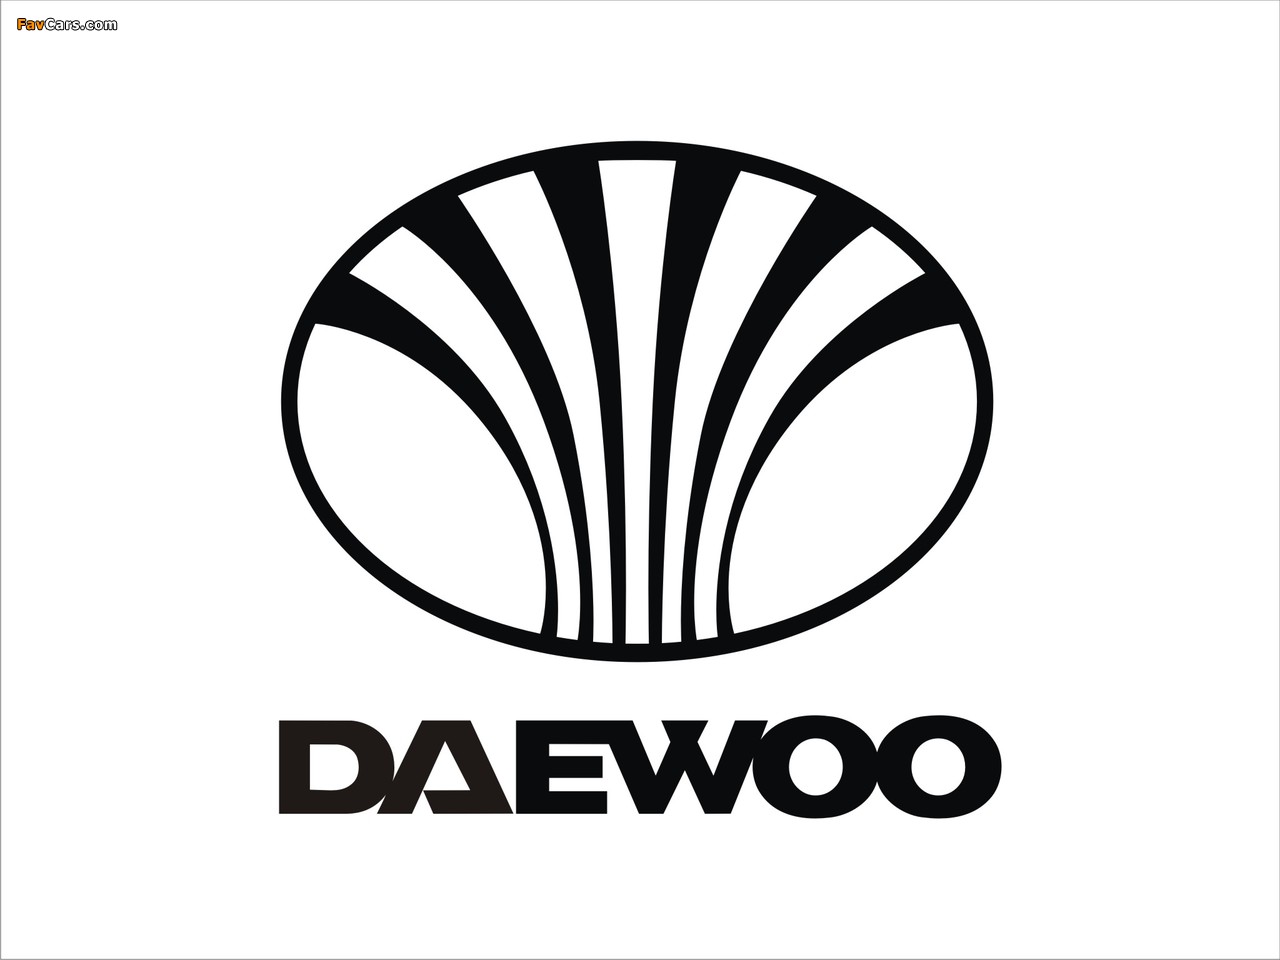 Daewoo images (1280 x 960)